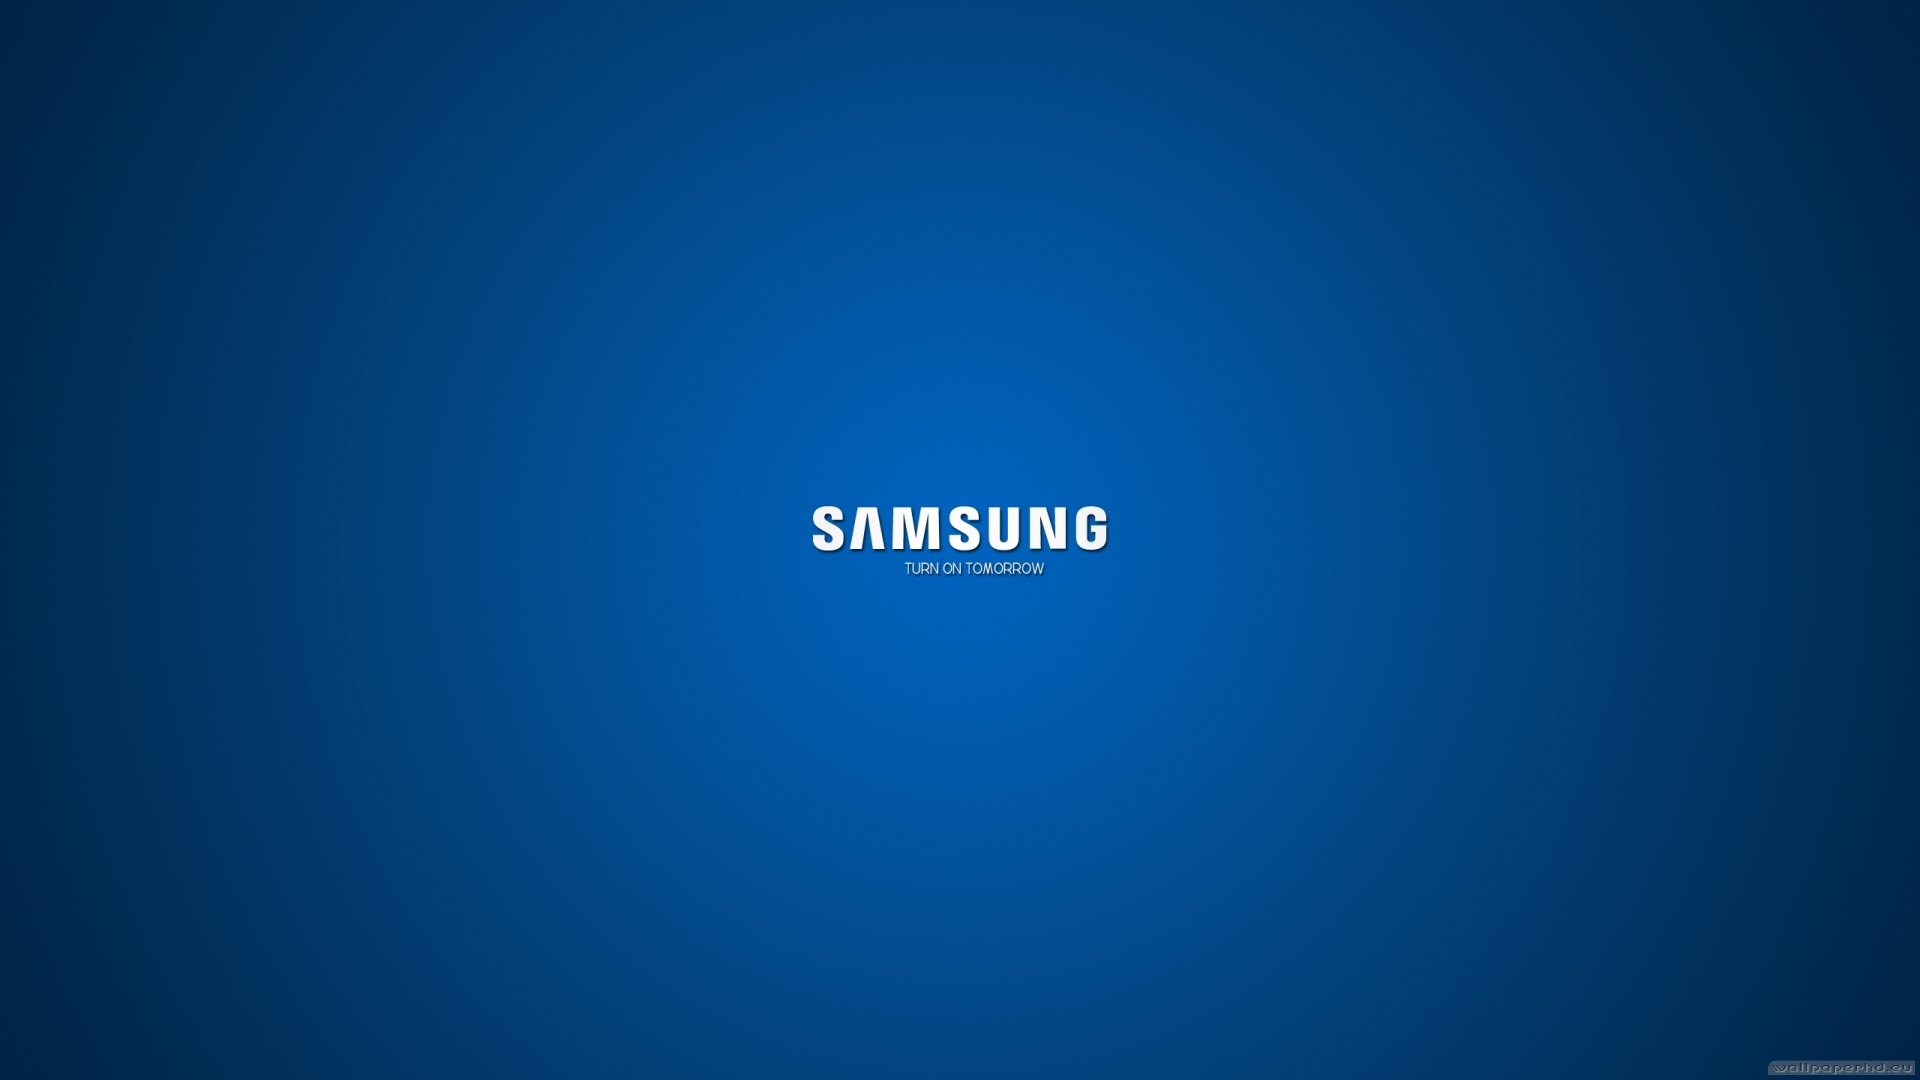 Samsung Galaxy Note 2 Wallpaper Hd Beautiful beach hd wallpapers